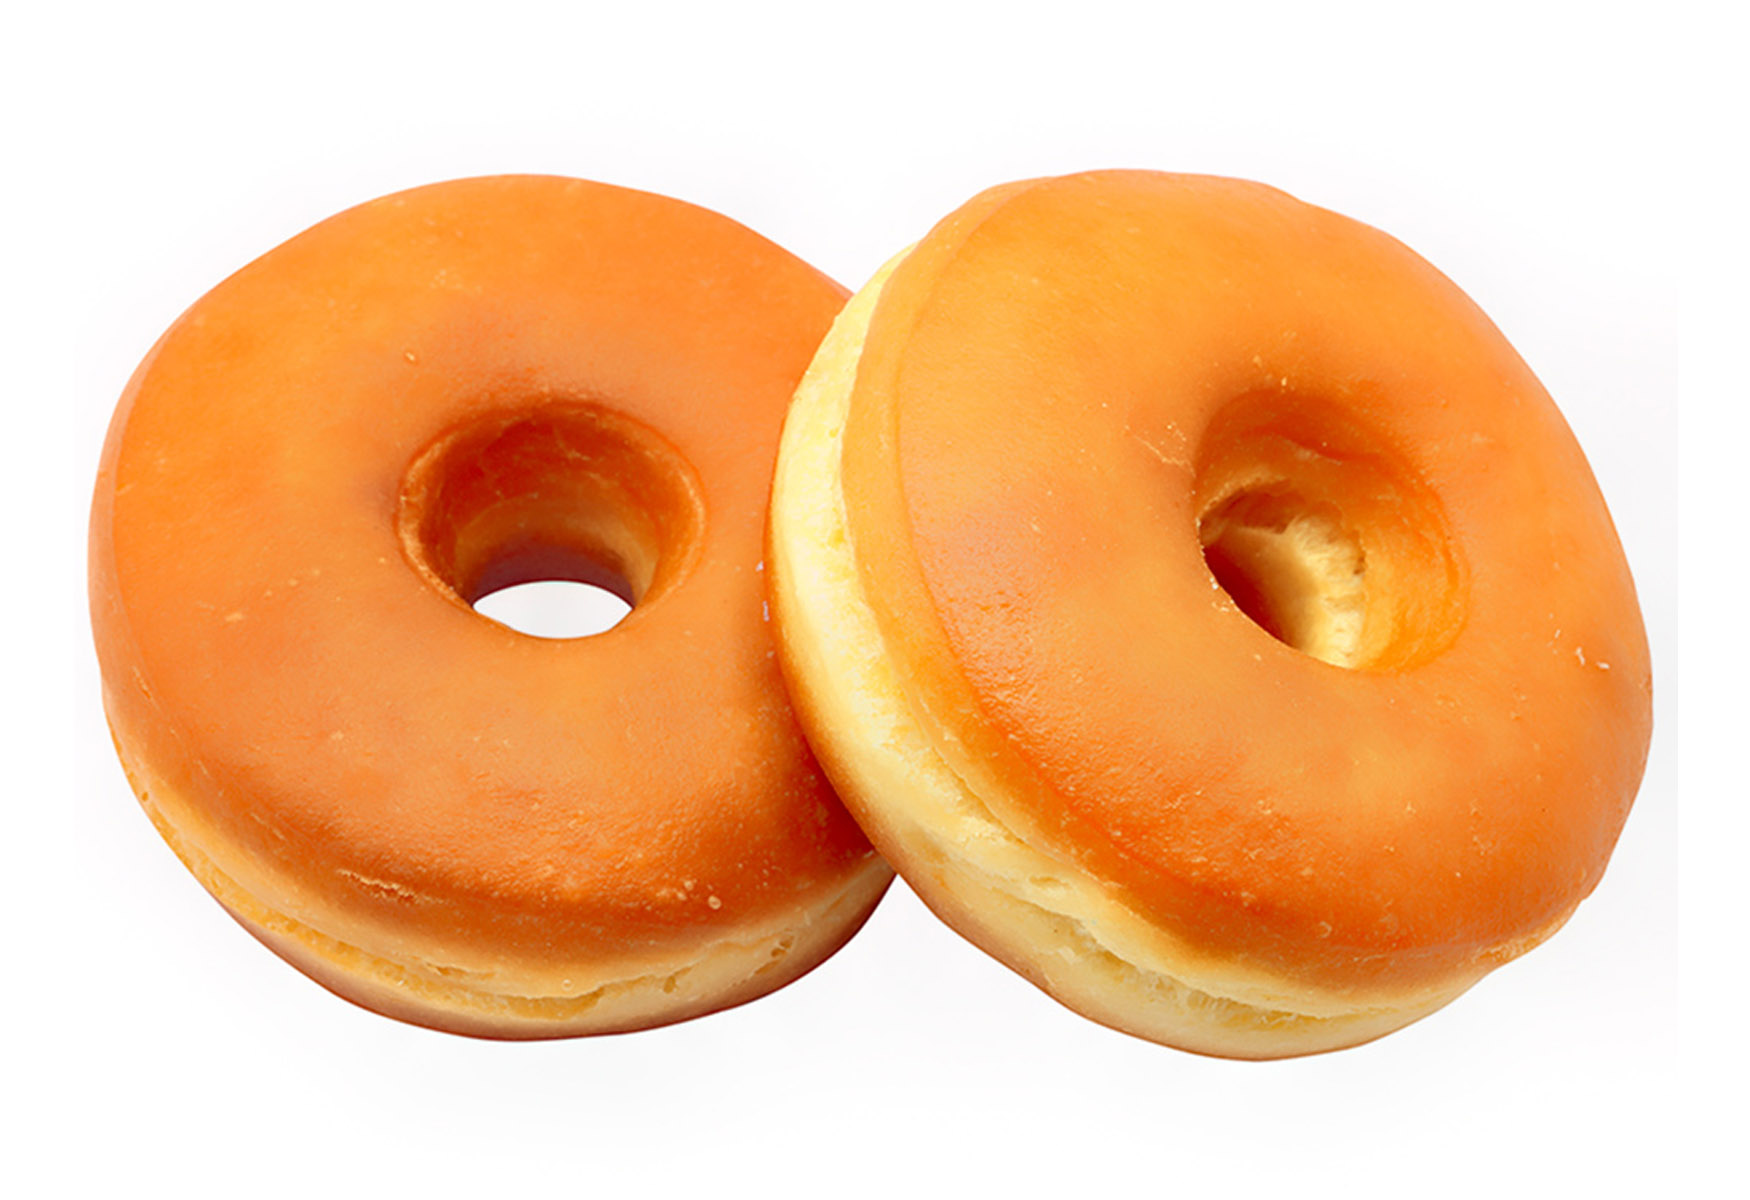 15-plain-donut-nutrition-facts